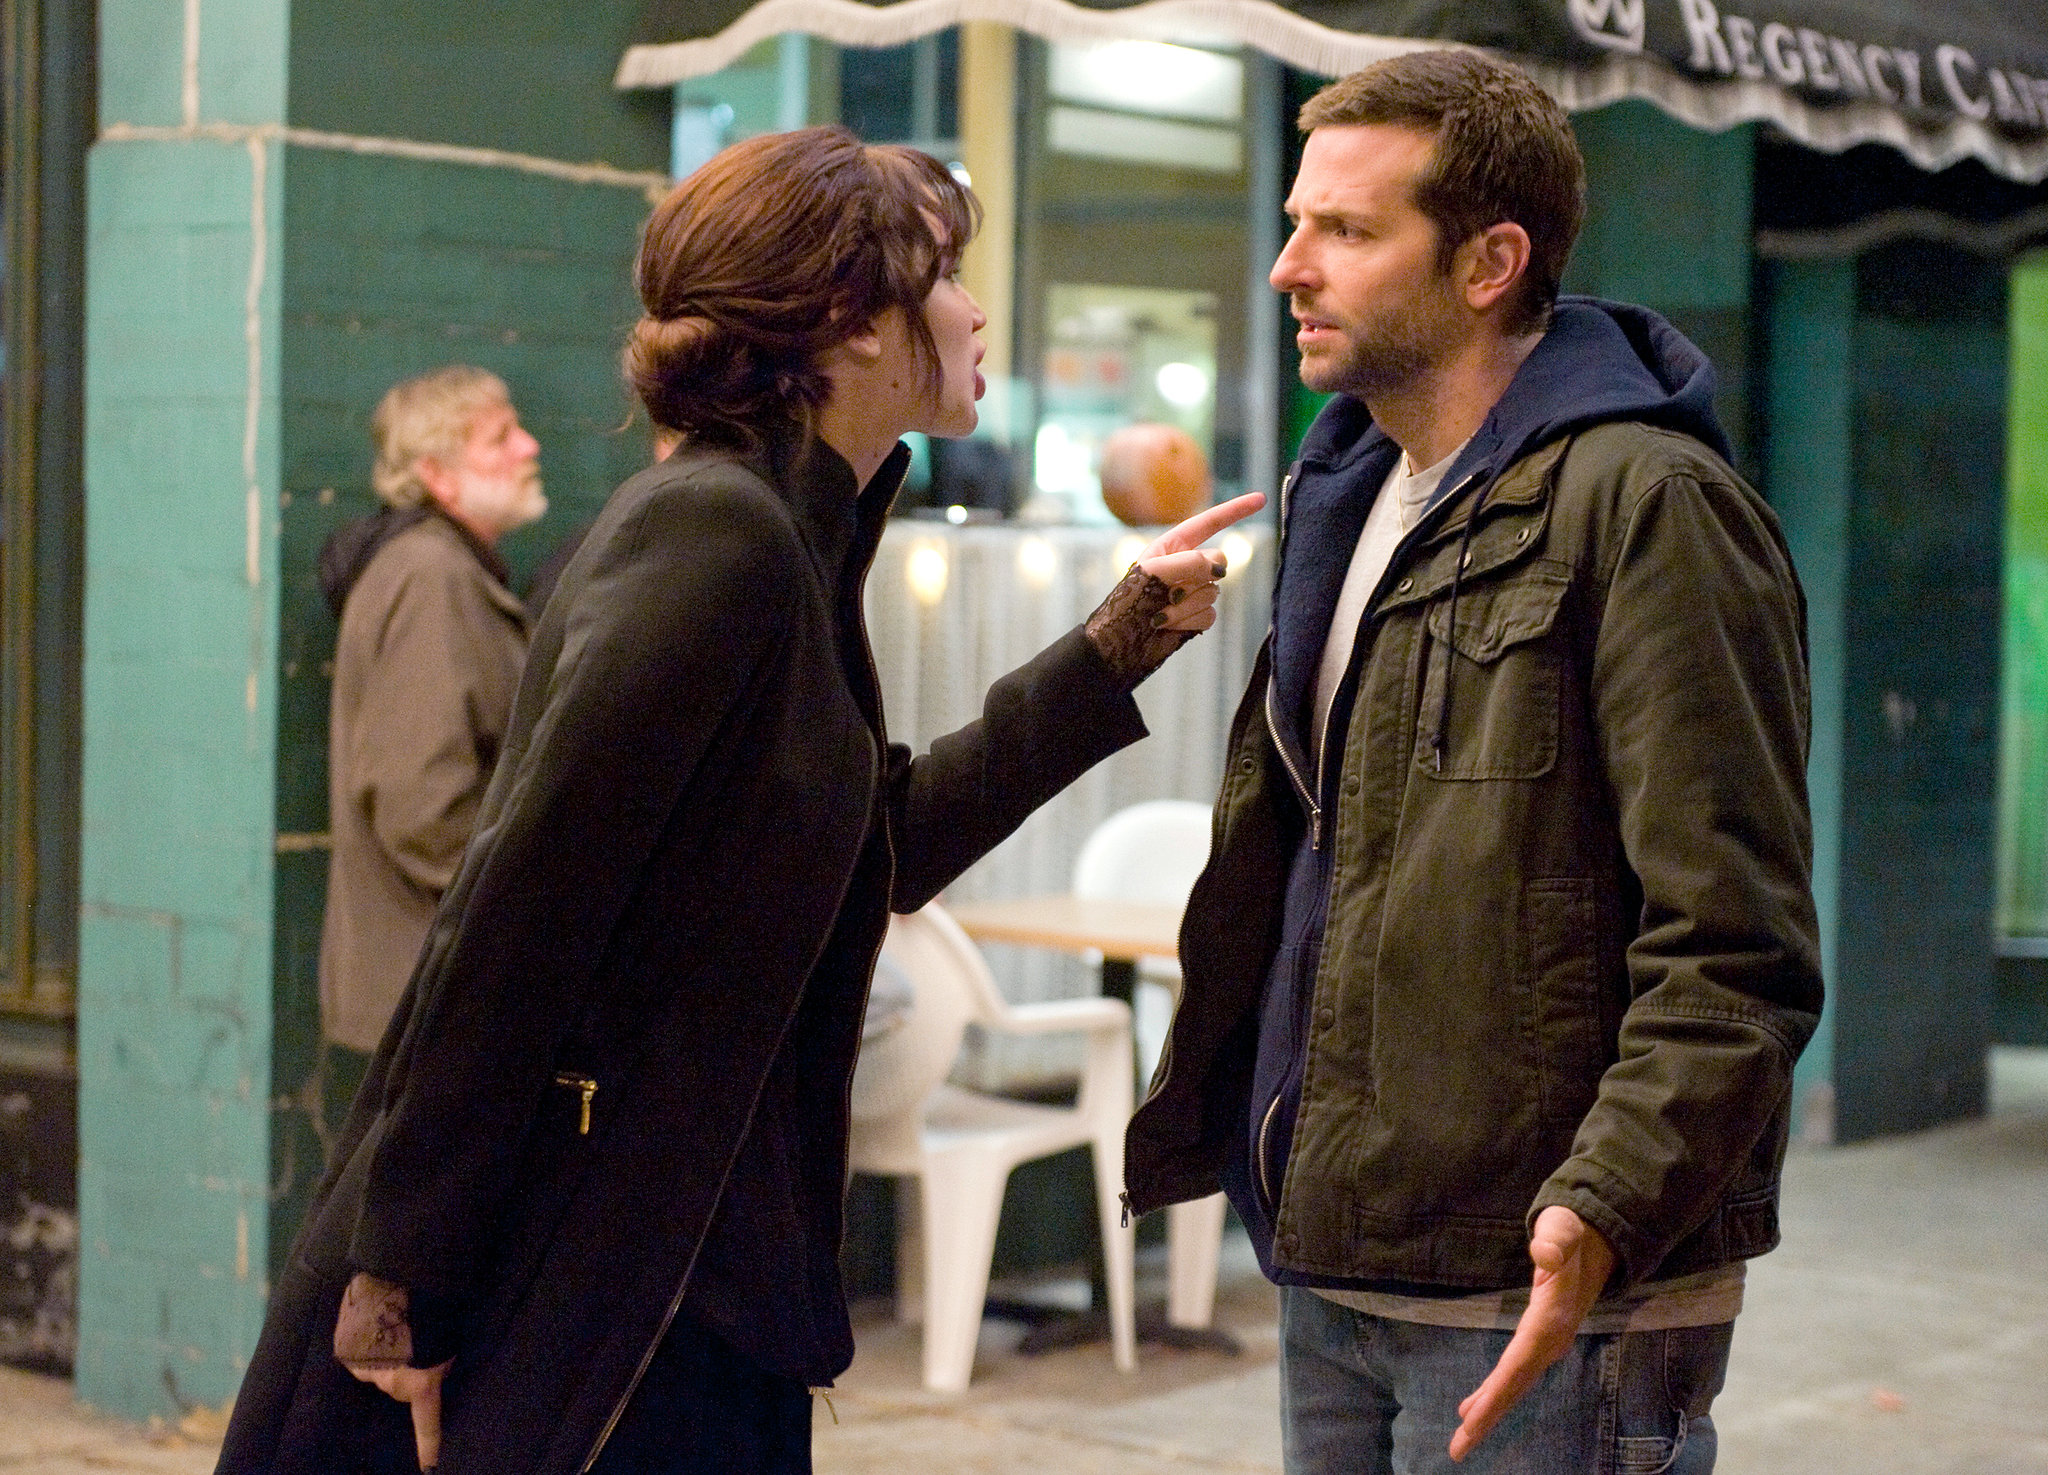 Tiffany (Jennifer Lawrence) gives Pat (Bradley Cooper) a piece of her mind